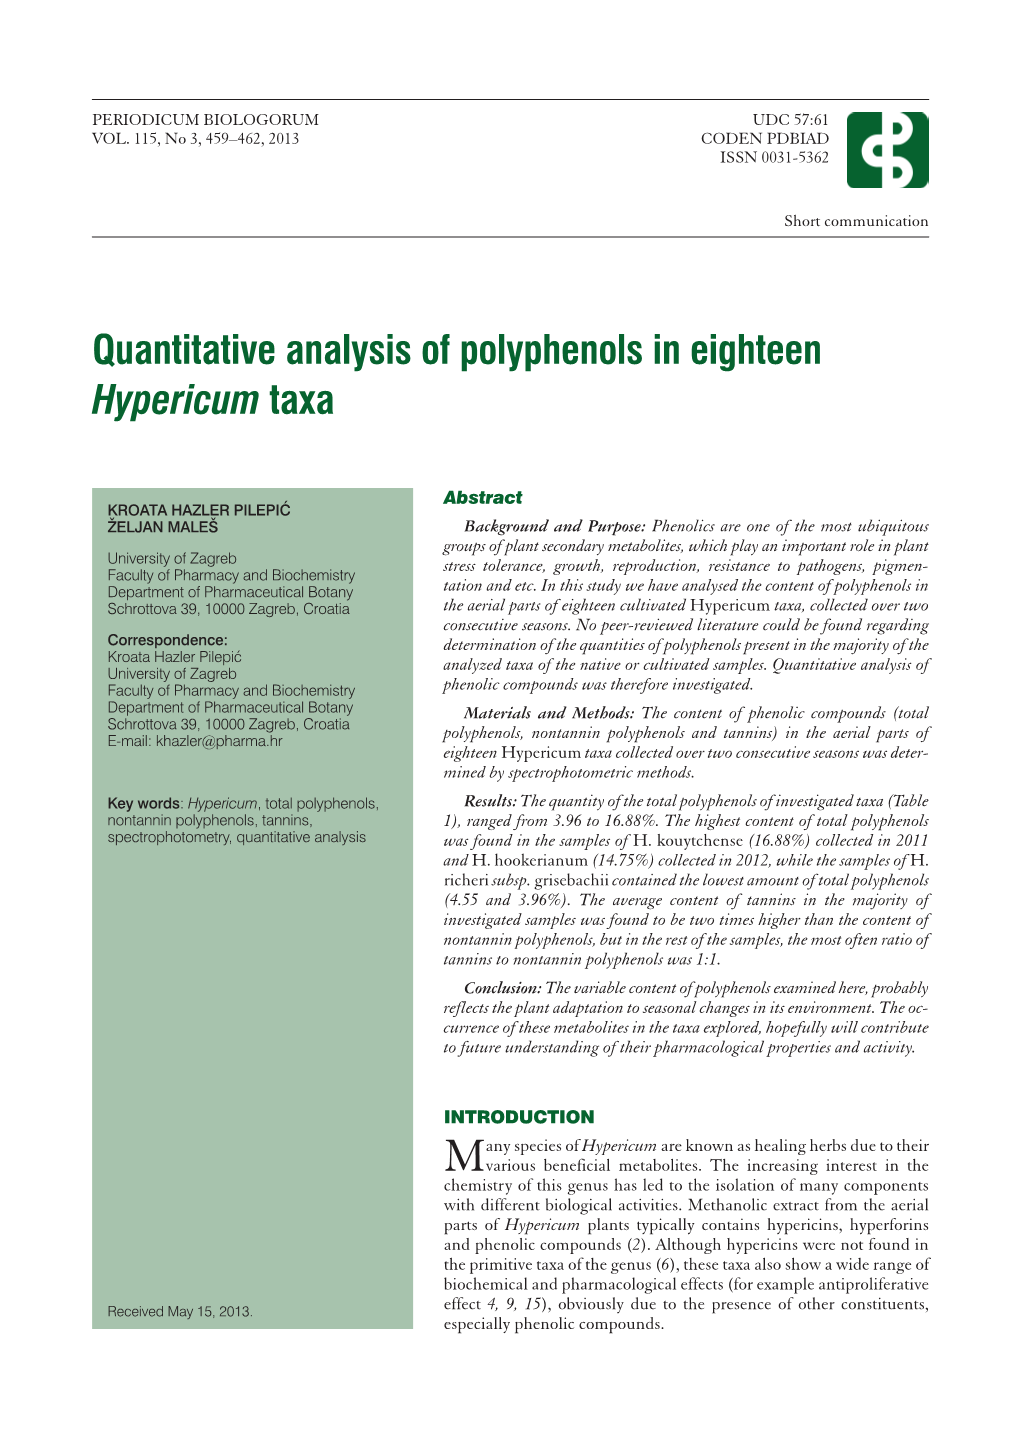 Quantitative Analysis of Polyphenols in Eighteen Hypericum Taxa